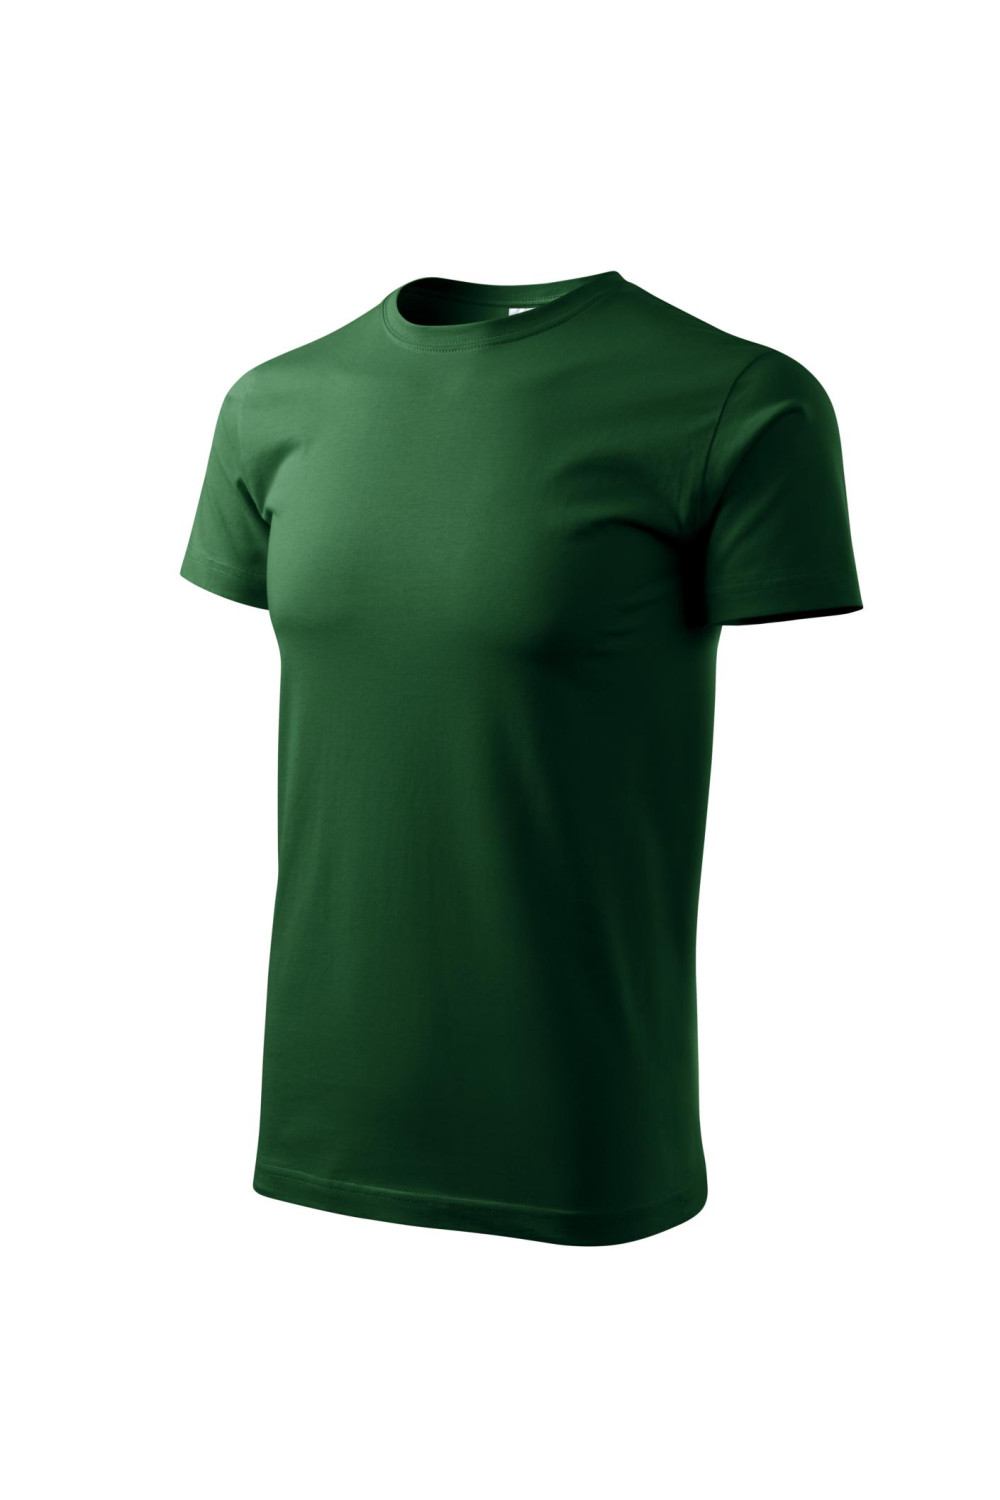 Koszulka męska 100% bawełna BASIC 129  kolor zieleń butelkowa